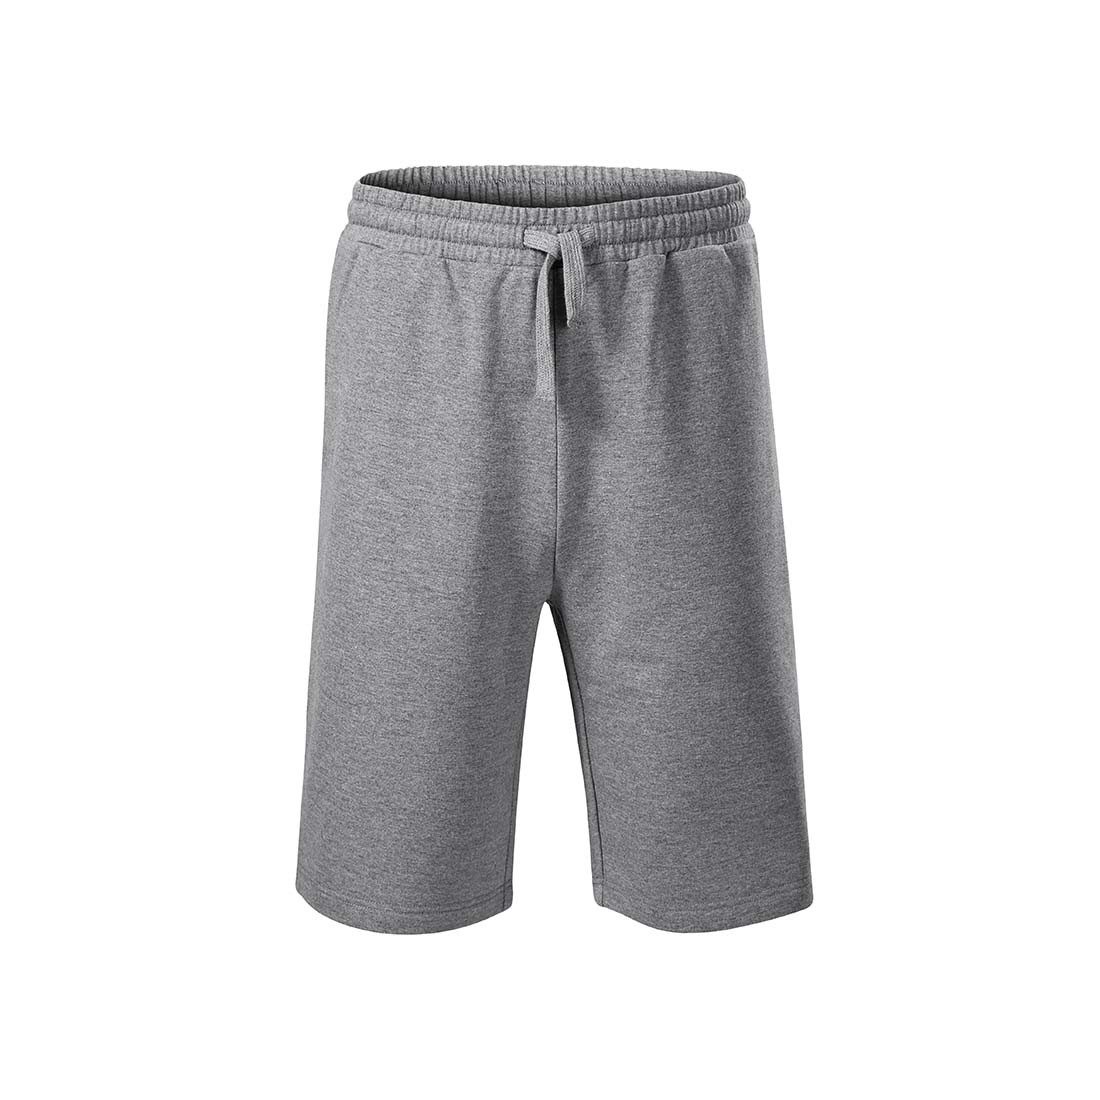 Men's Sports Shorts - Safetywear